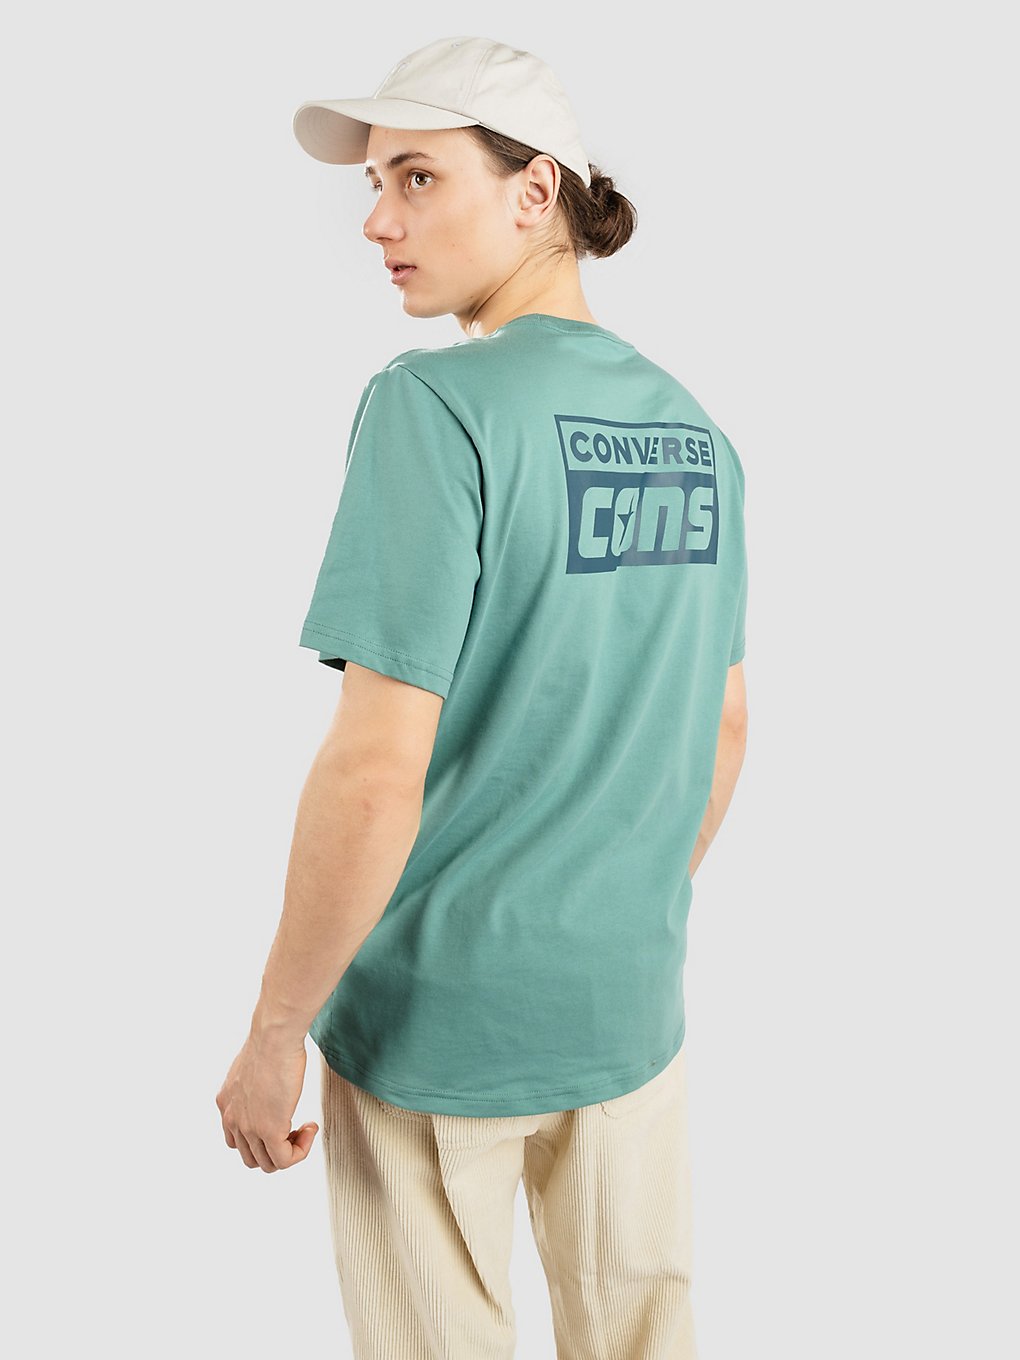 Converse Cons T-Shirt algae coast kaufen